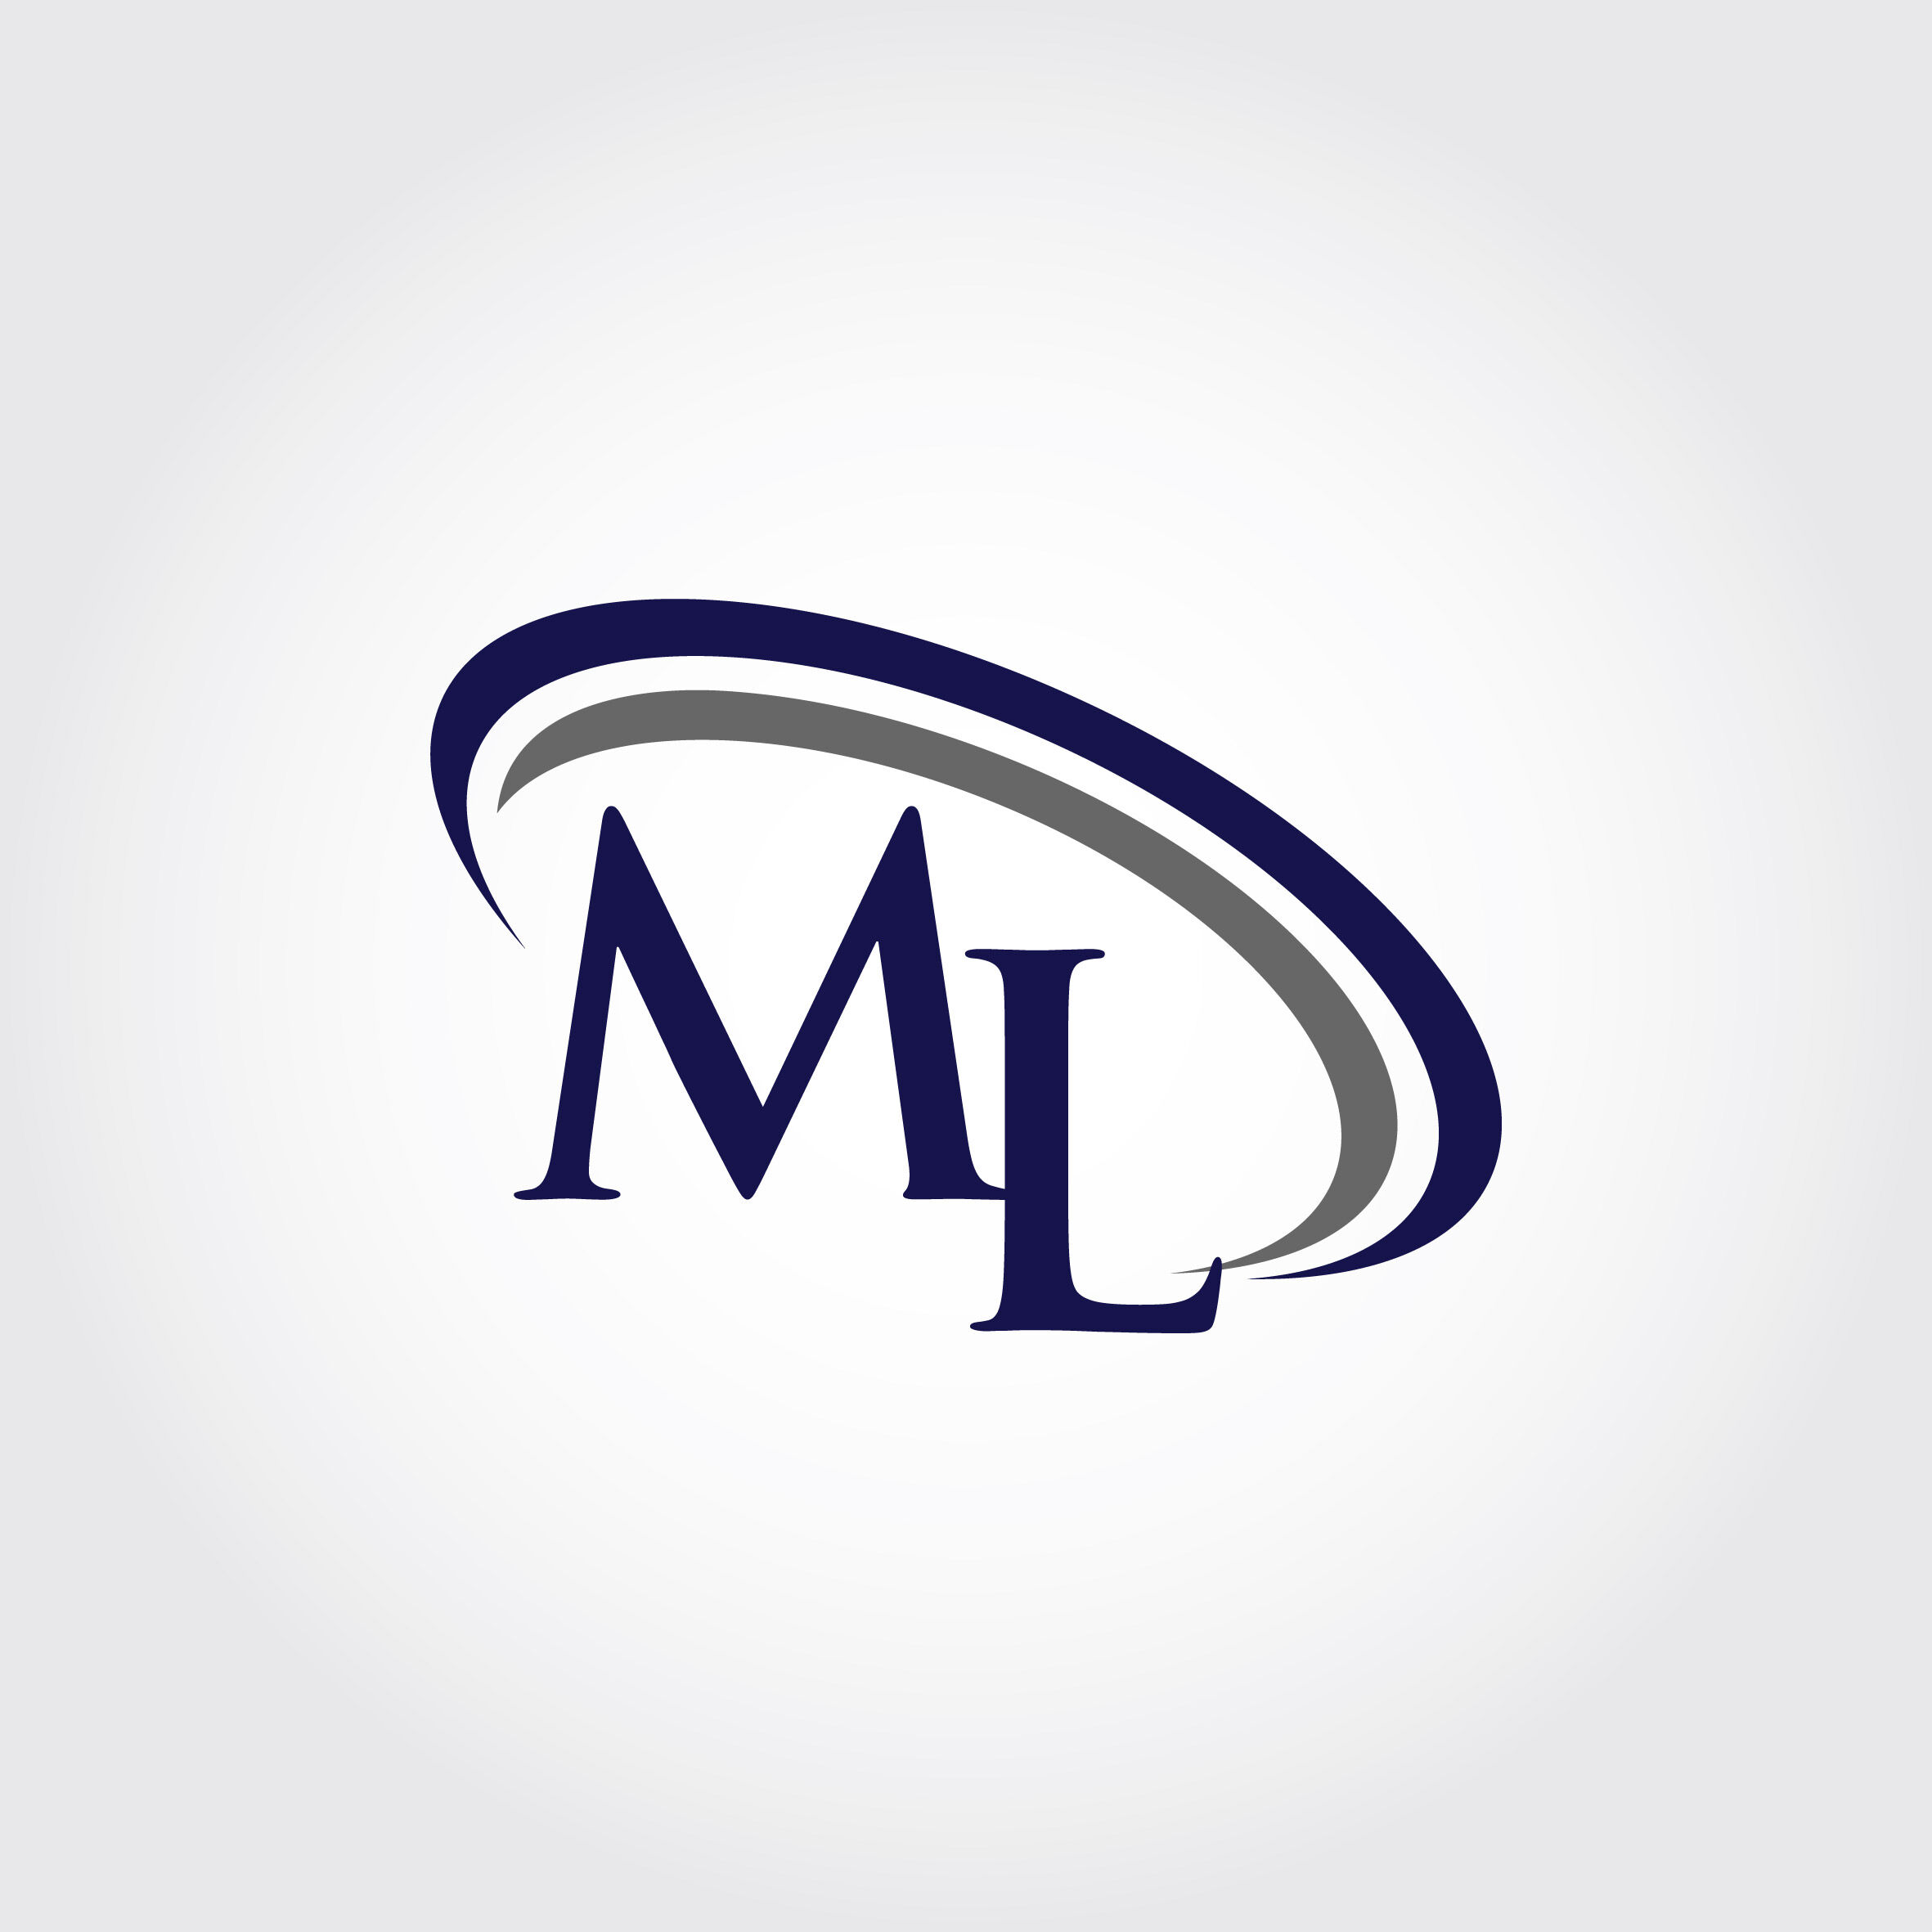 Monogram Ml Logo Design By Vectorseller Thehungryjpeg Com